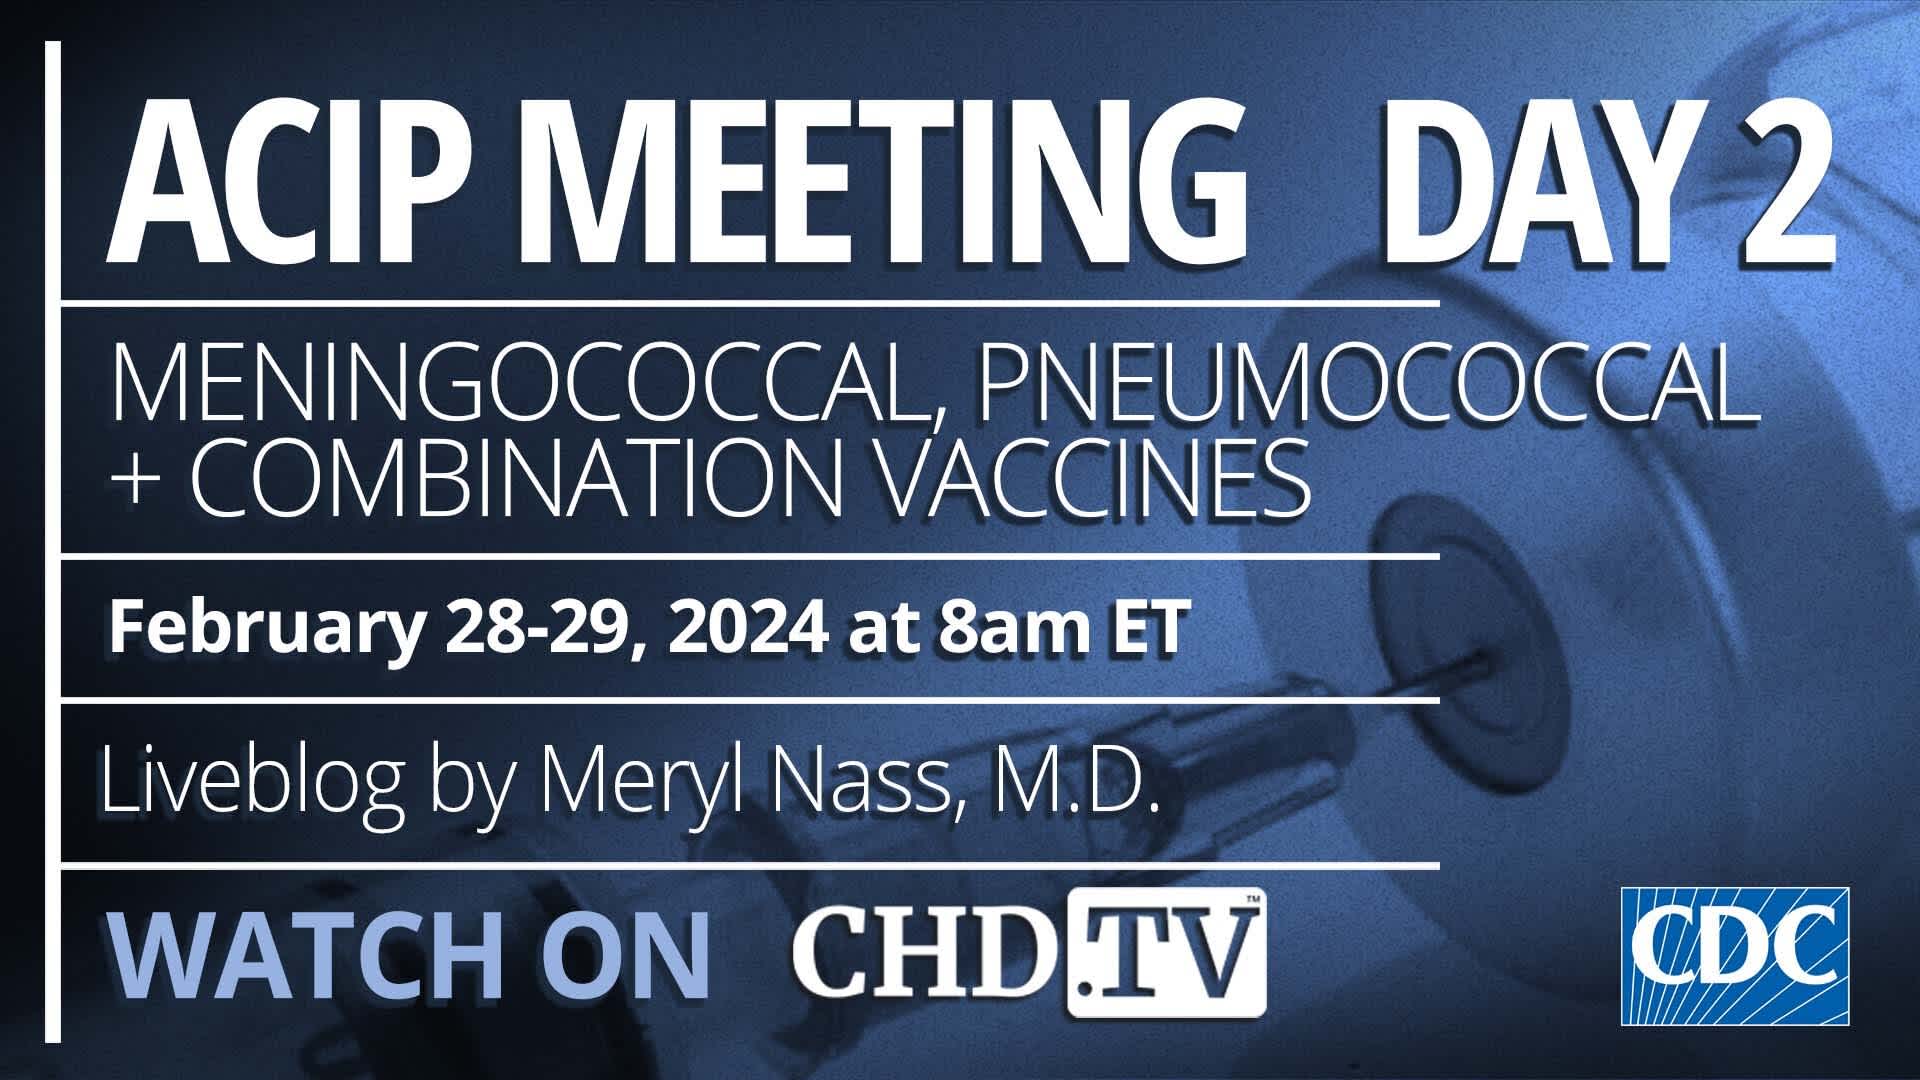 CDC ACIP Meeting: Meningococcal, Pneumococcal + Combination Vaccines | Feb 29, 2024